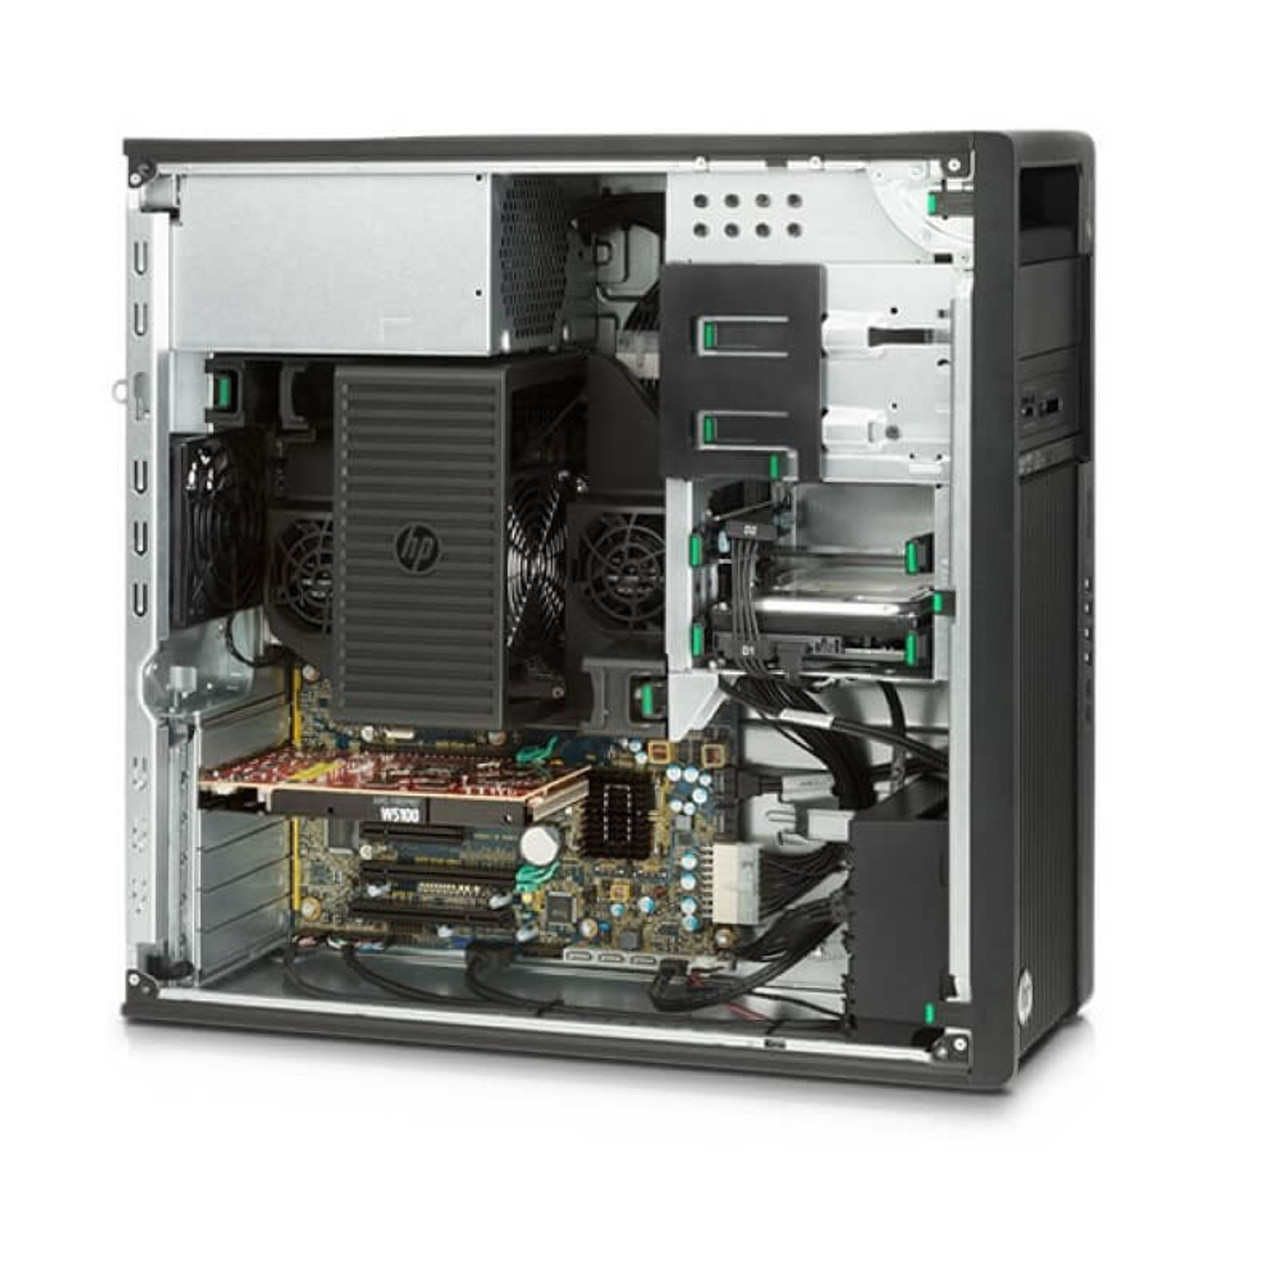 HP Z440 AutoCAD Workstation E5-1630 V4 4 Cores 8 Threads 3.7Ghz 16GB 250GB  NVMe Quadro K2200 Win 10 Pro